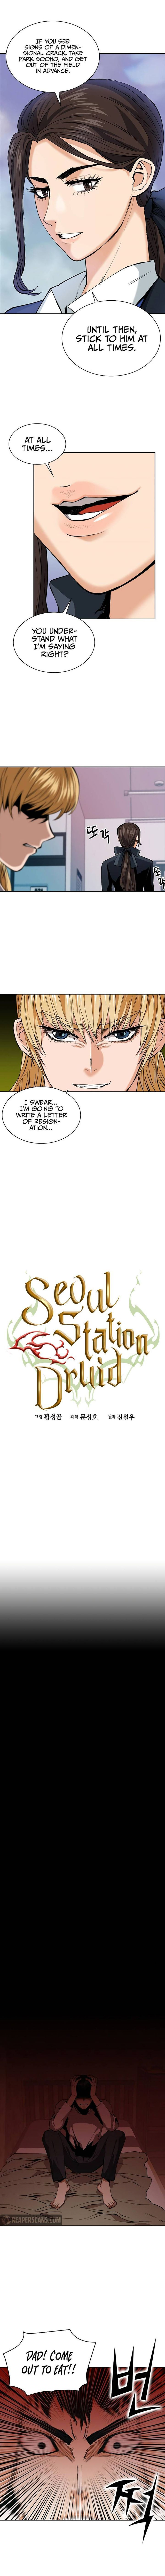 Seoul Station Druid 23 2